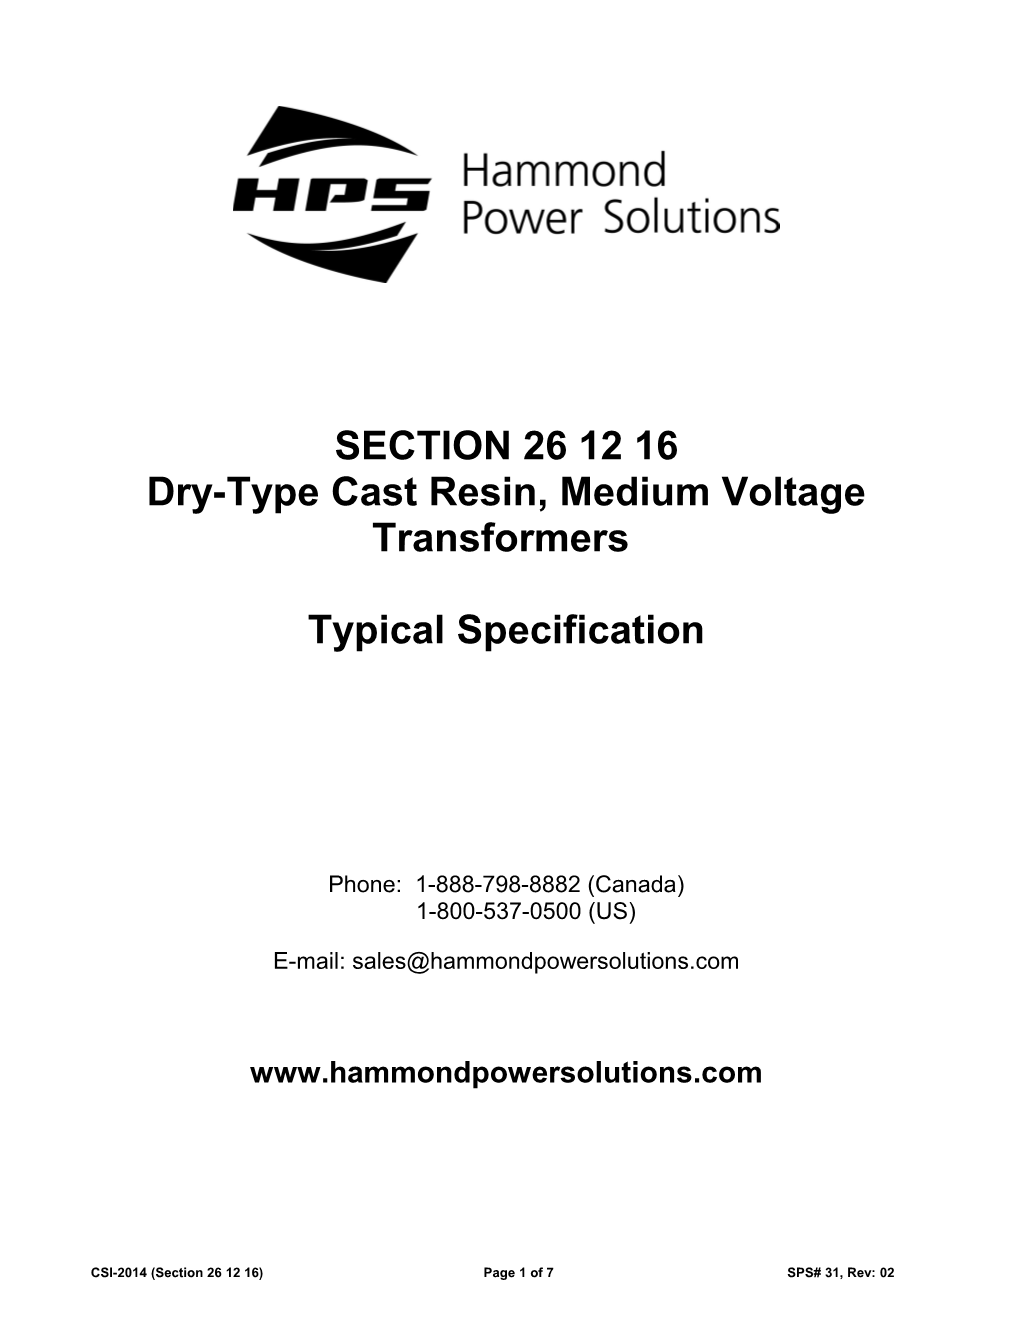 Dry-Typecast Resin, Medium Voltage Transformers